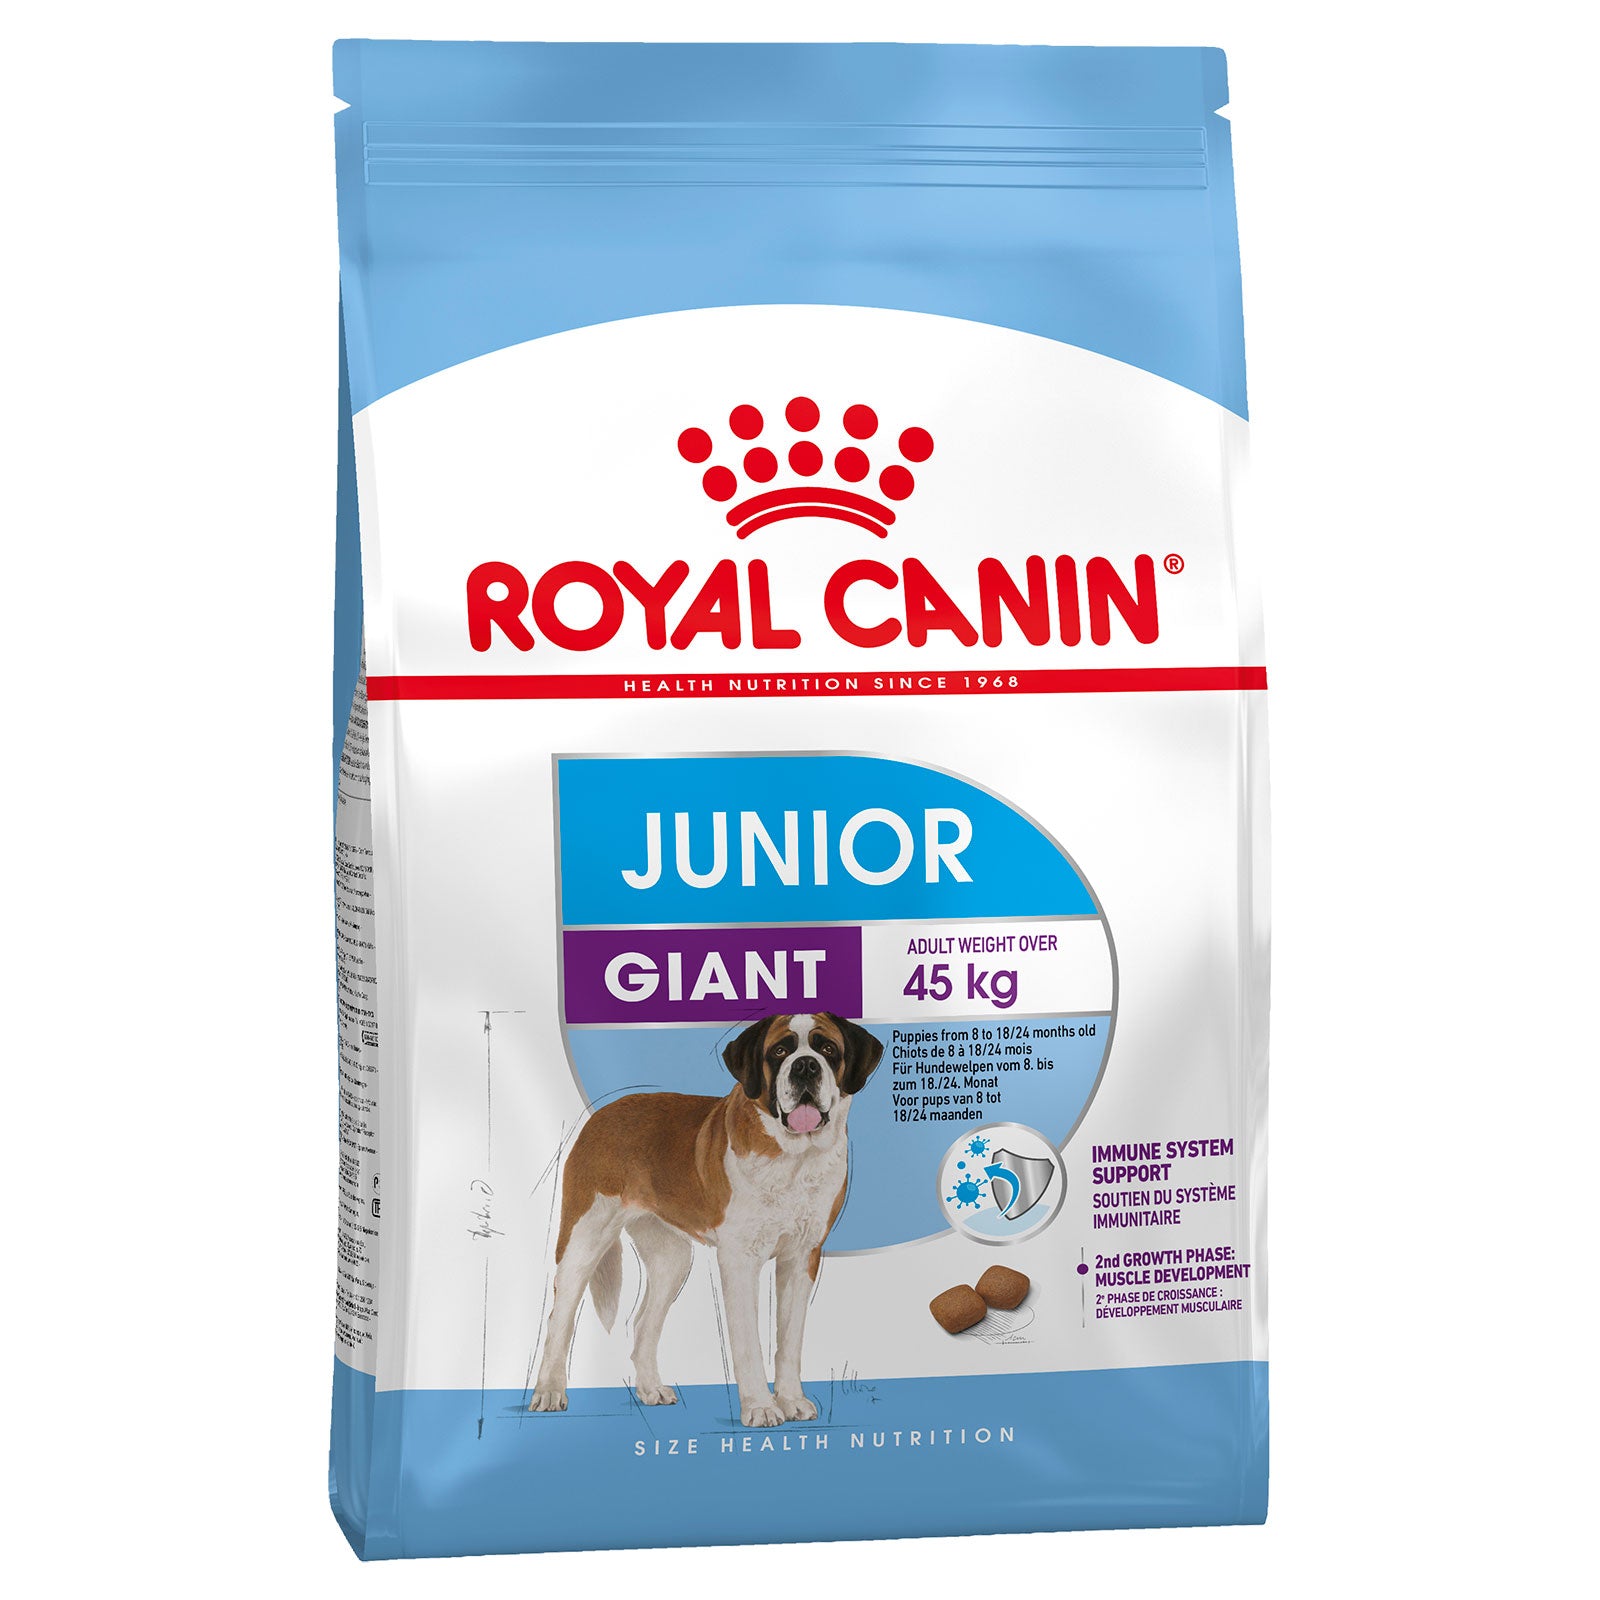 Royal Canin Dog Food Junior Giant